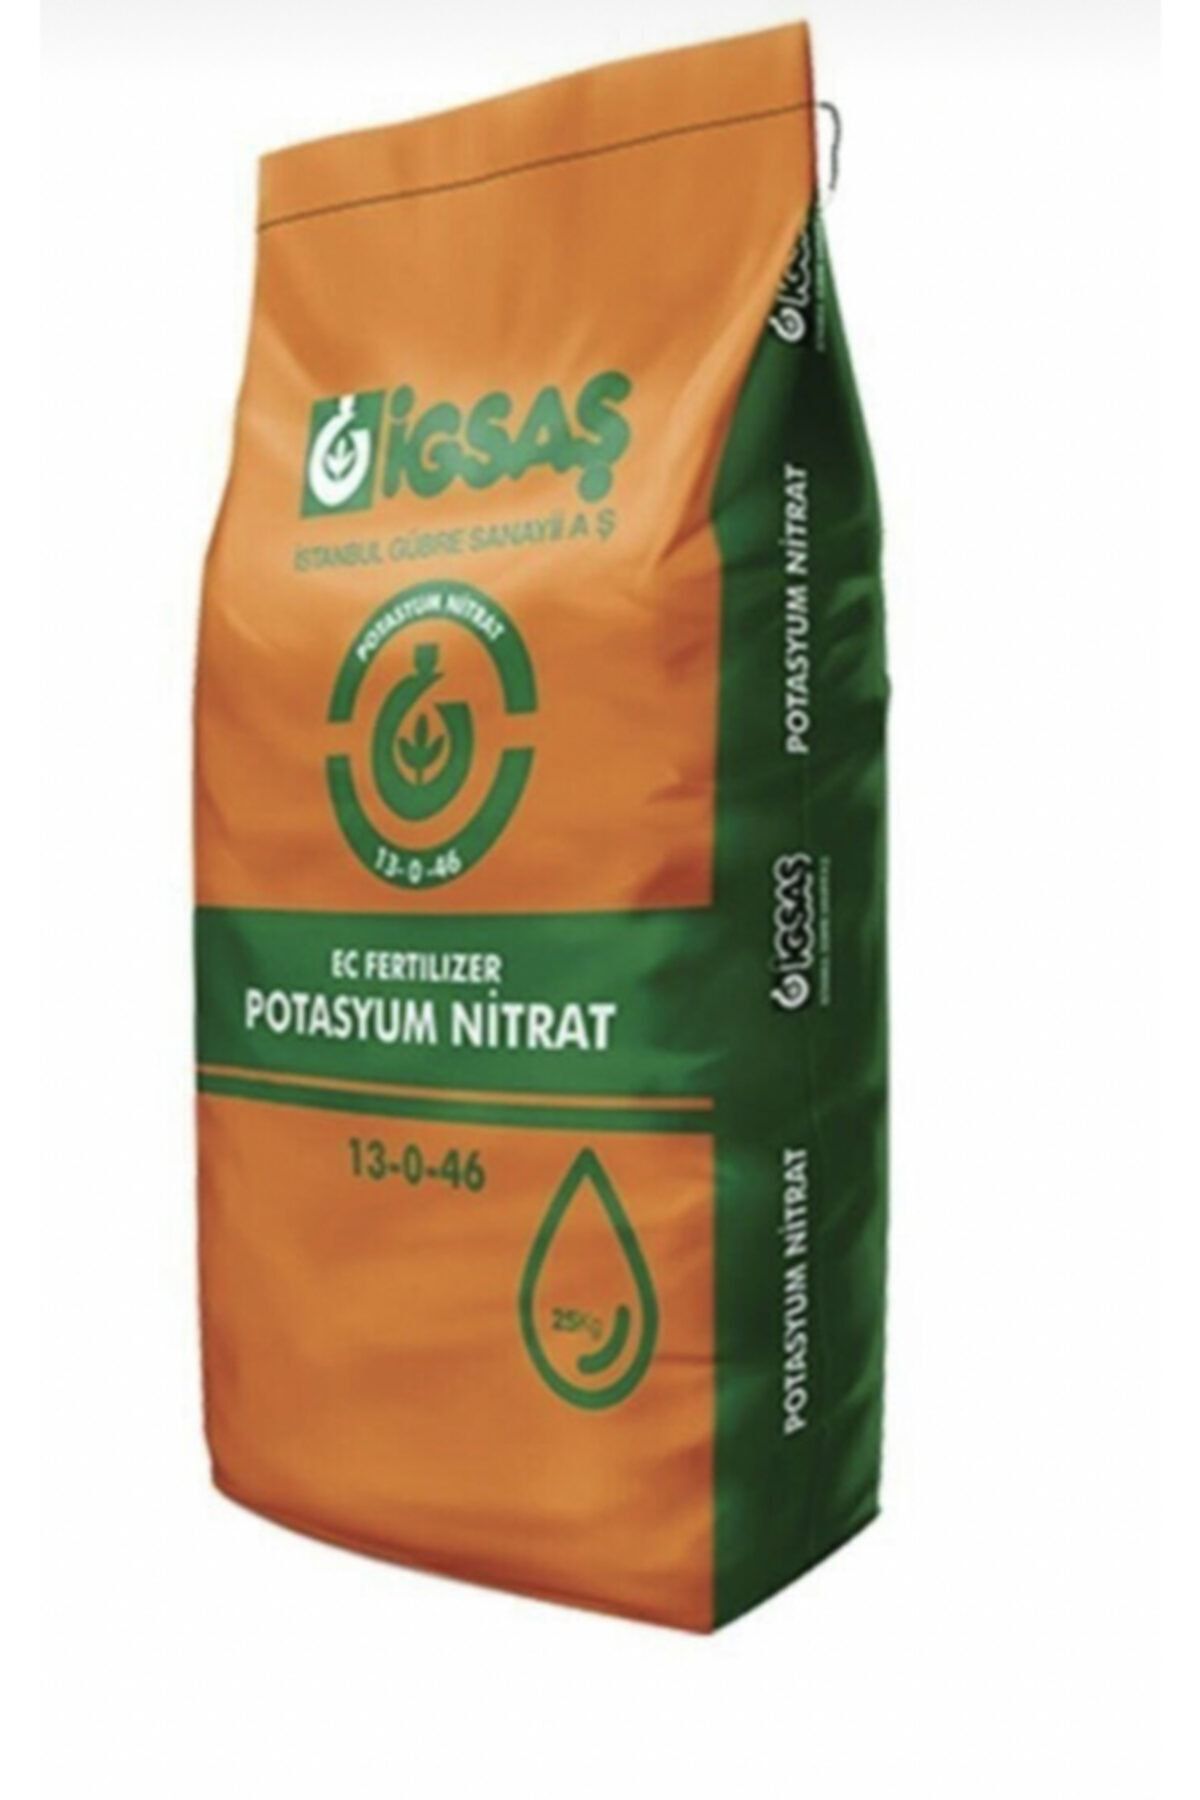 İGSAŞ Potasyum Nitrat 25 kg